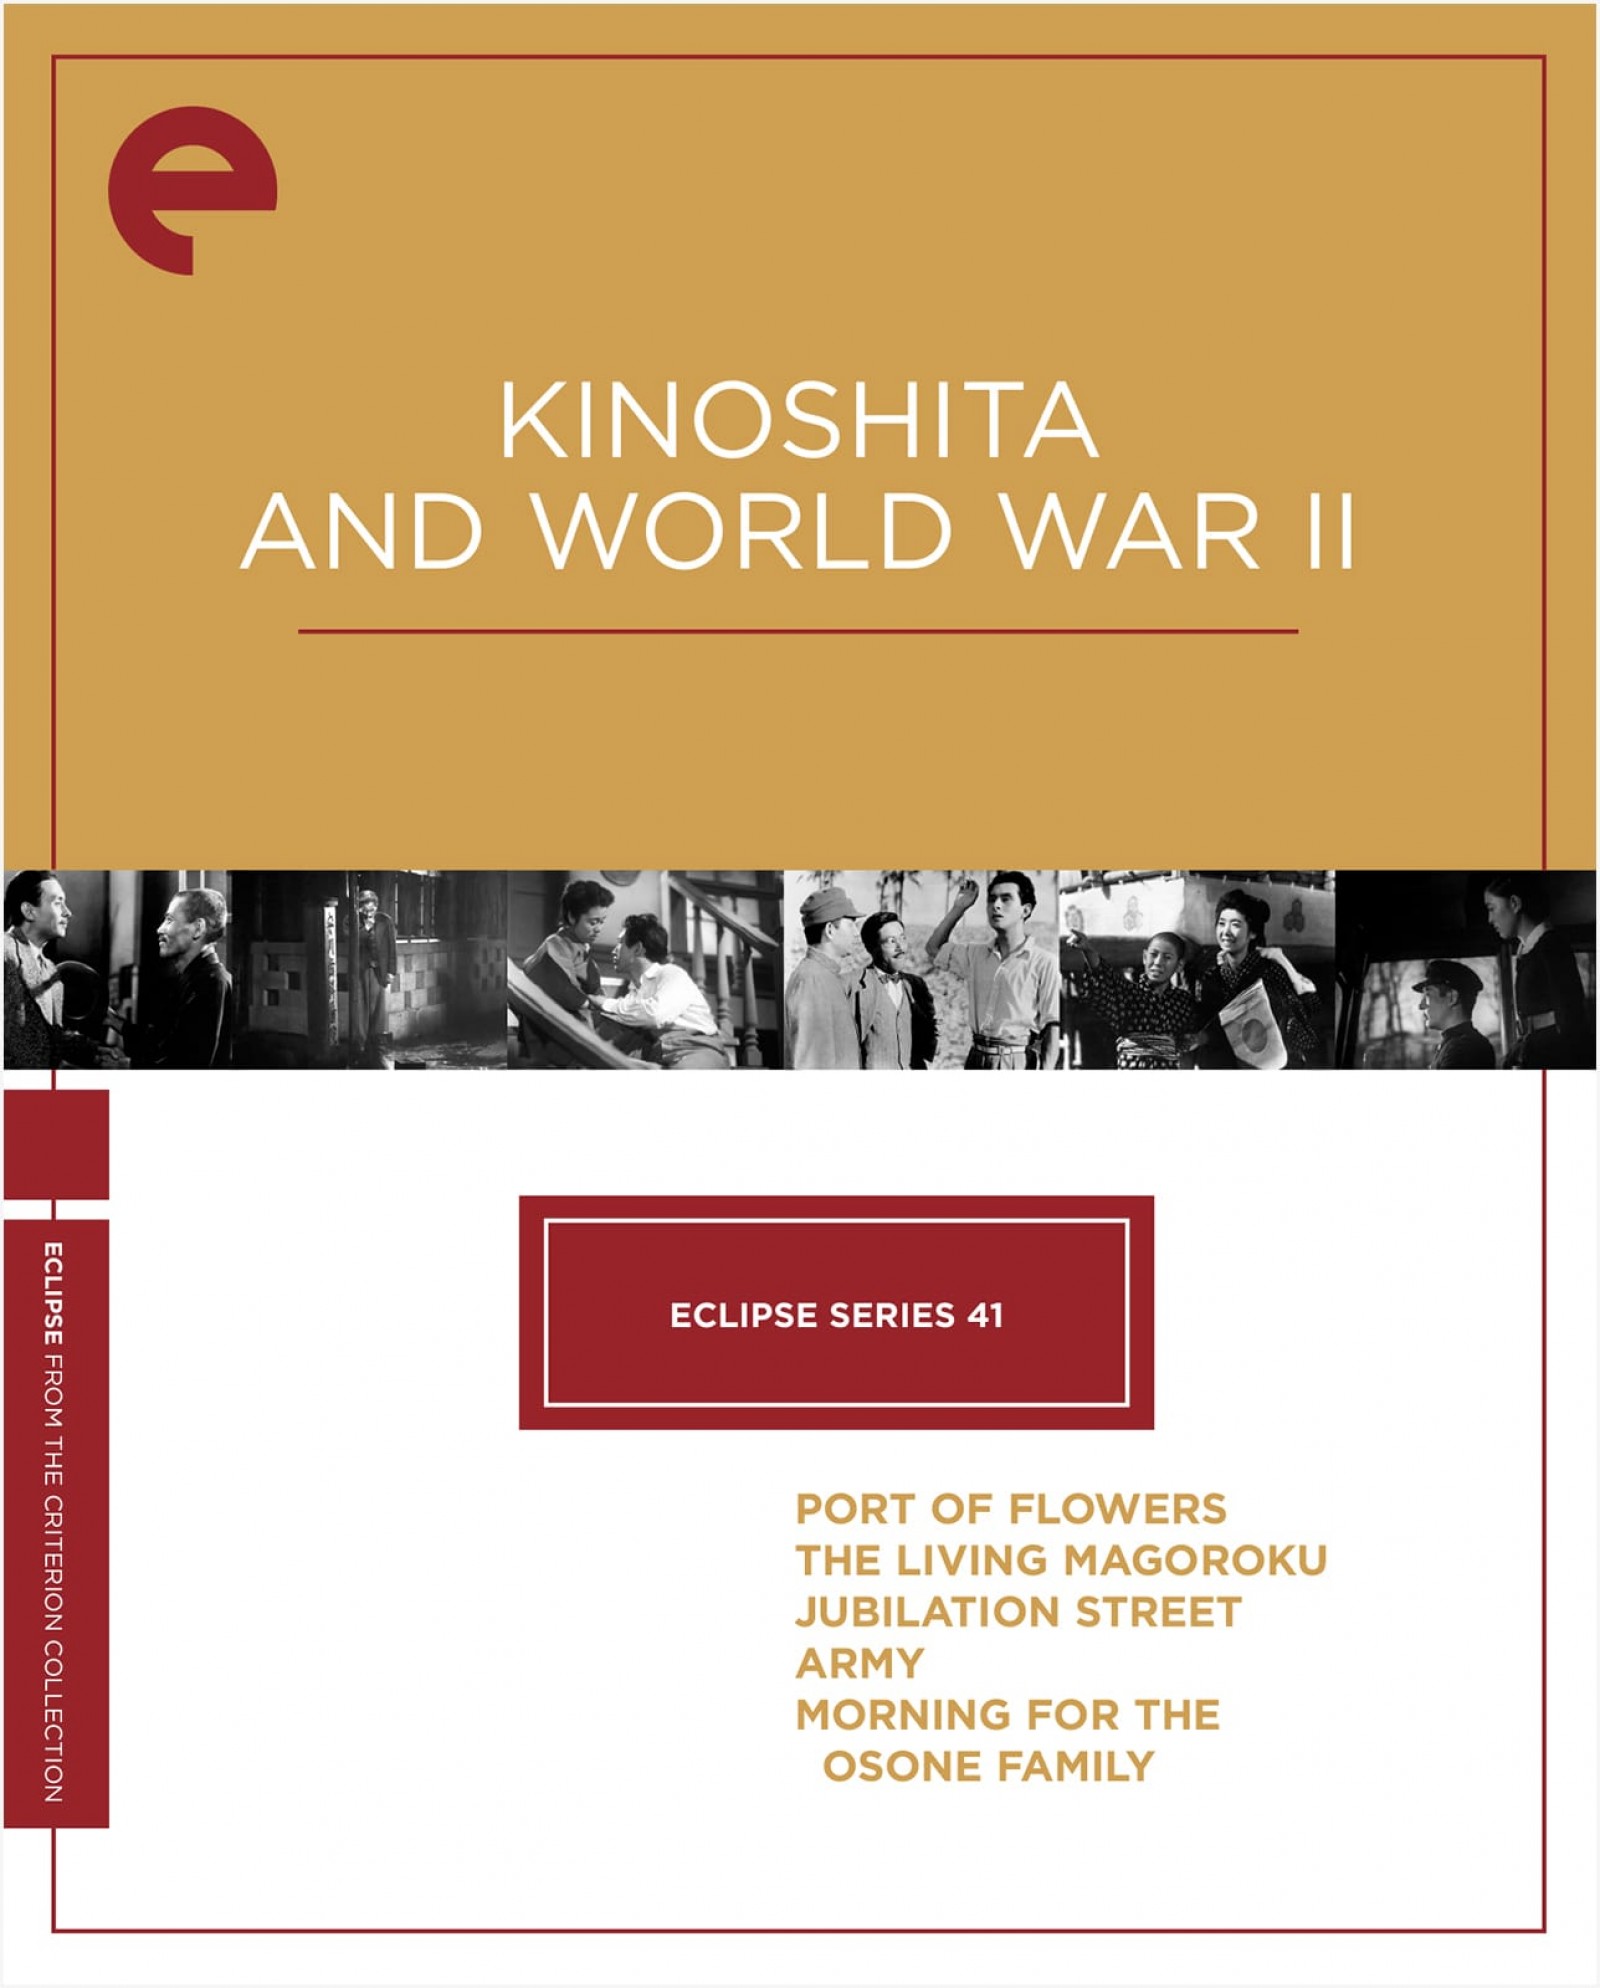 Eclipse Series 41: Kinoshita and World War II (1943-1946) [Criterion Collection]